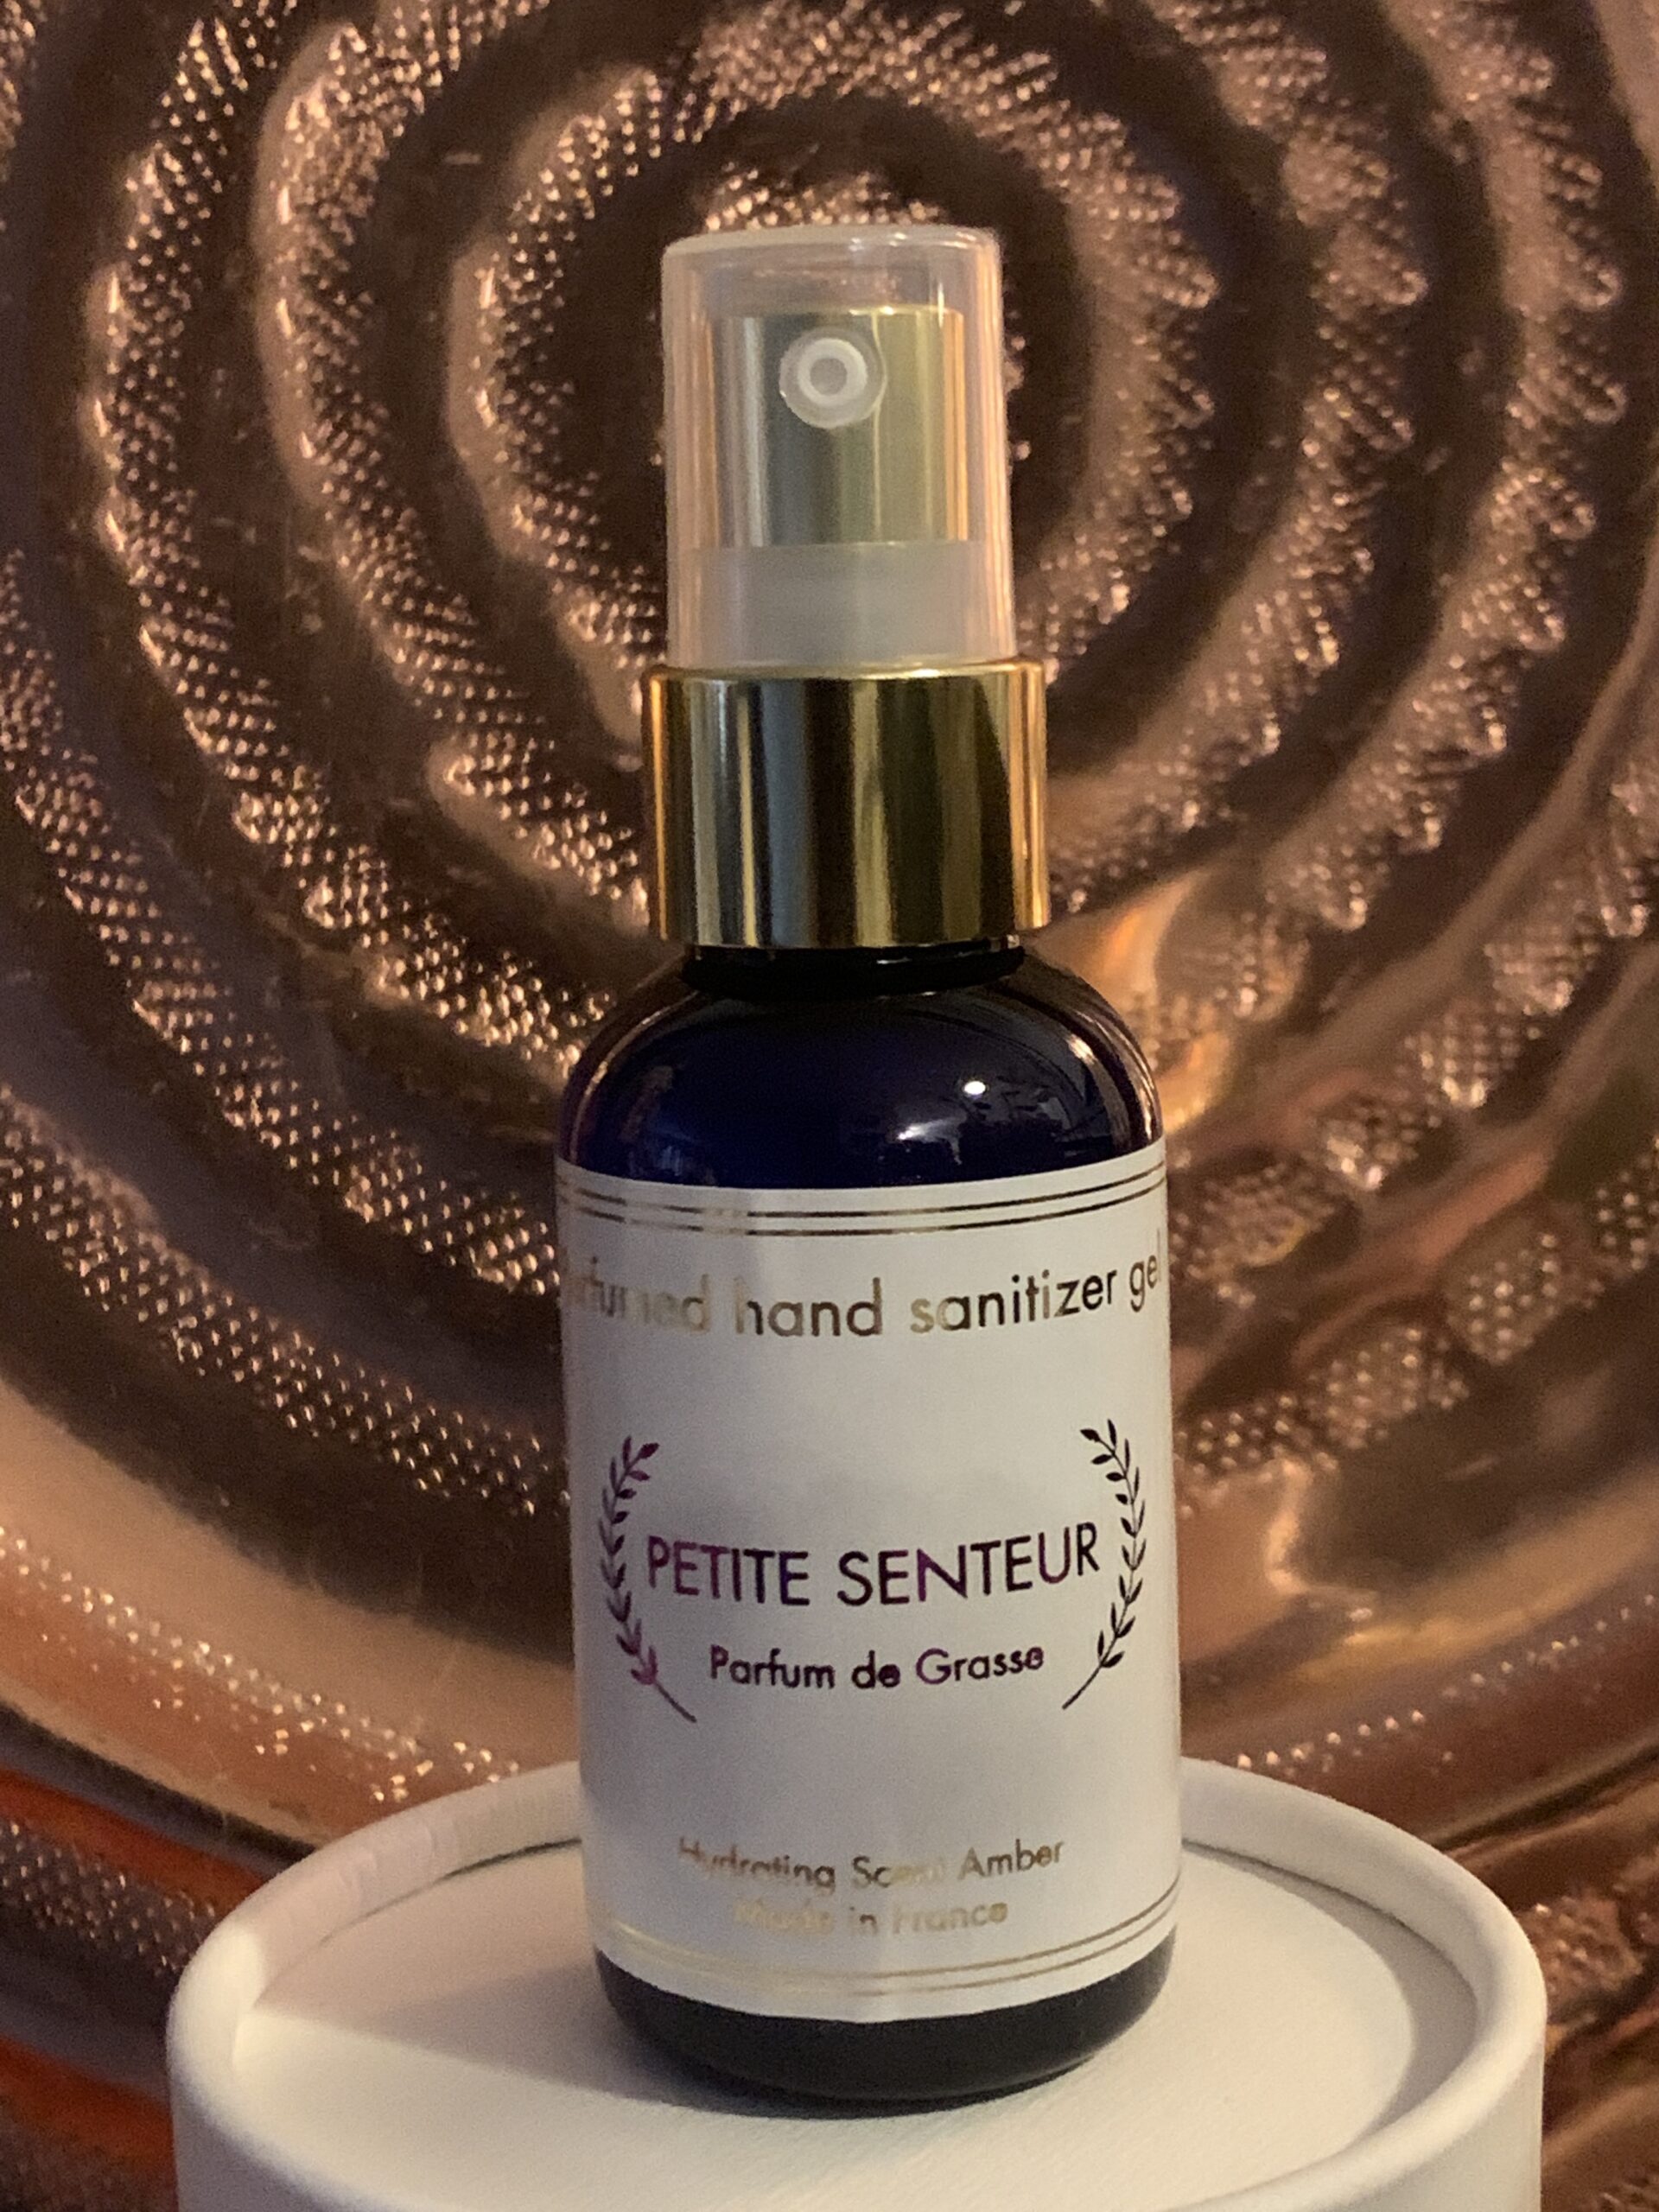 Petite Senteur perfumed hand sanitizer gel